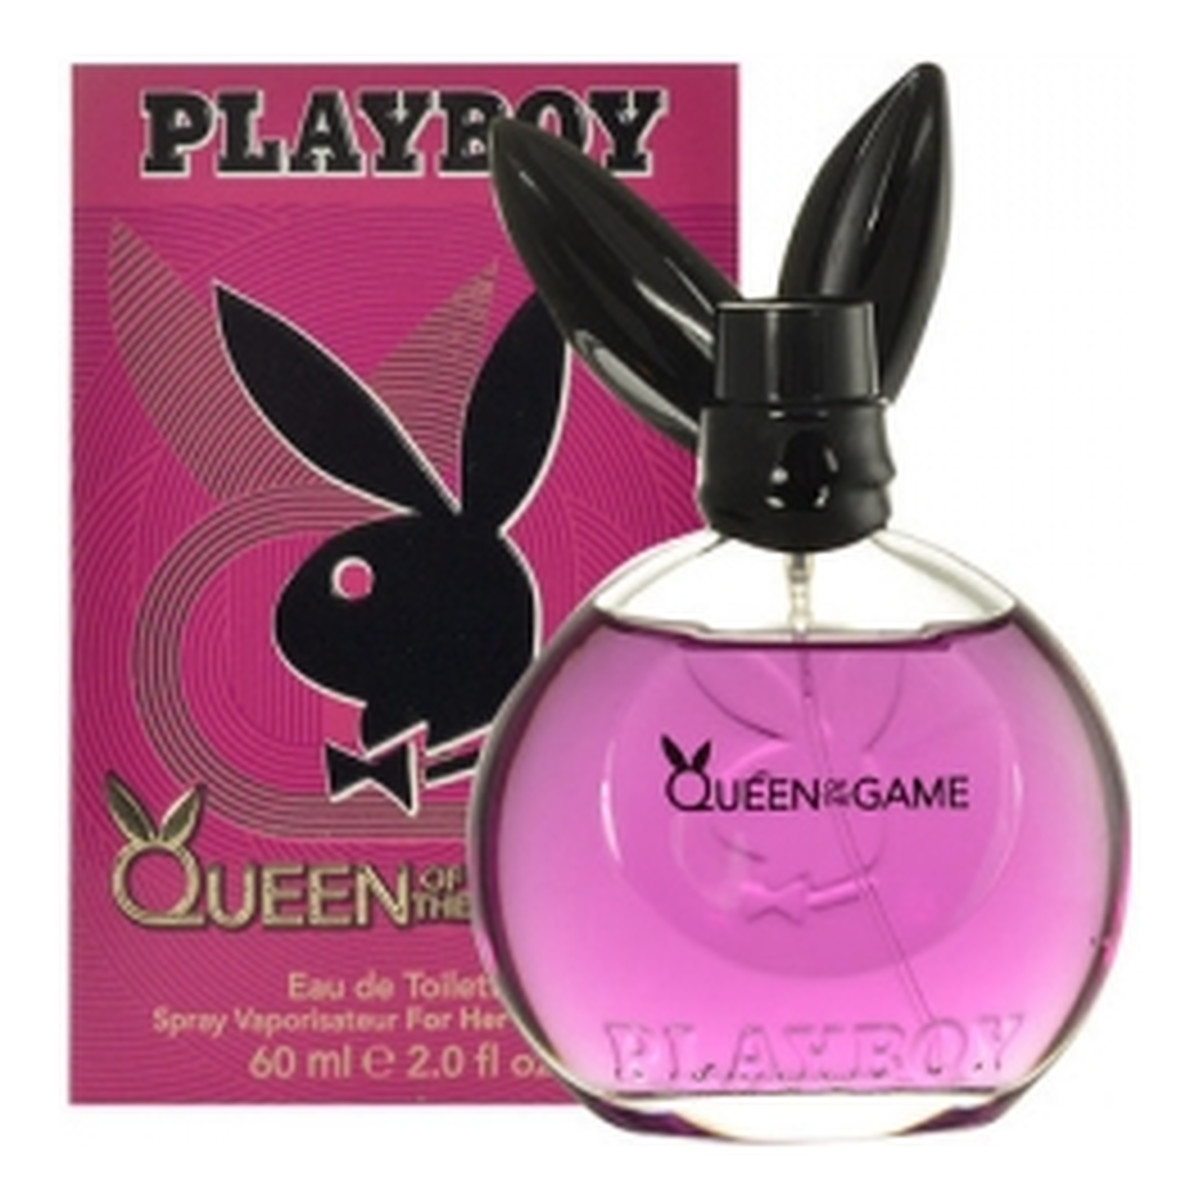 Playboy Queen Of The Game Woda Toaletowa 60ml